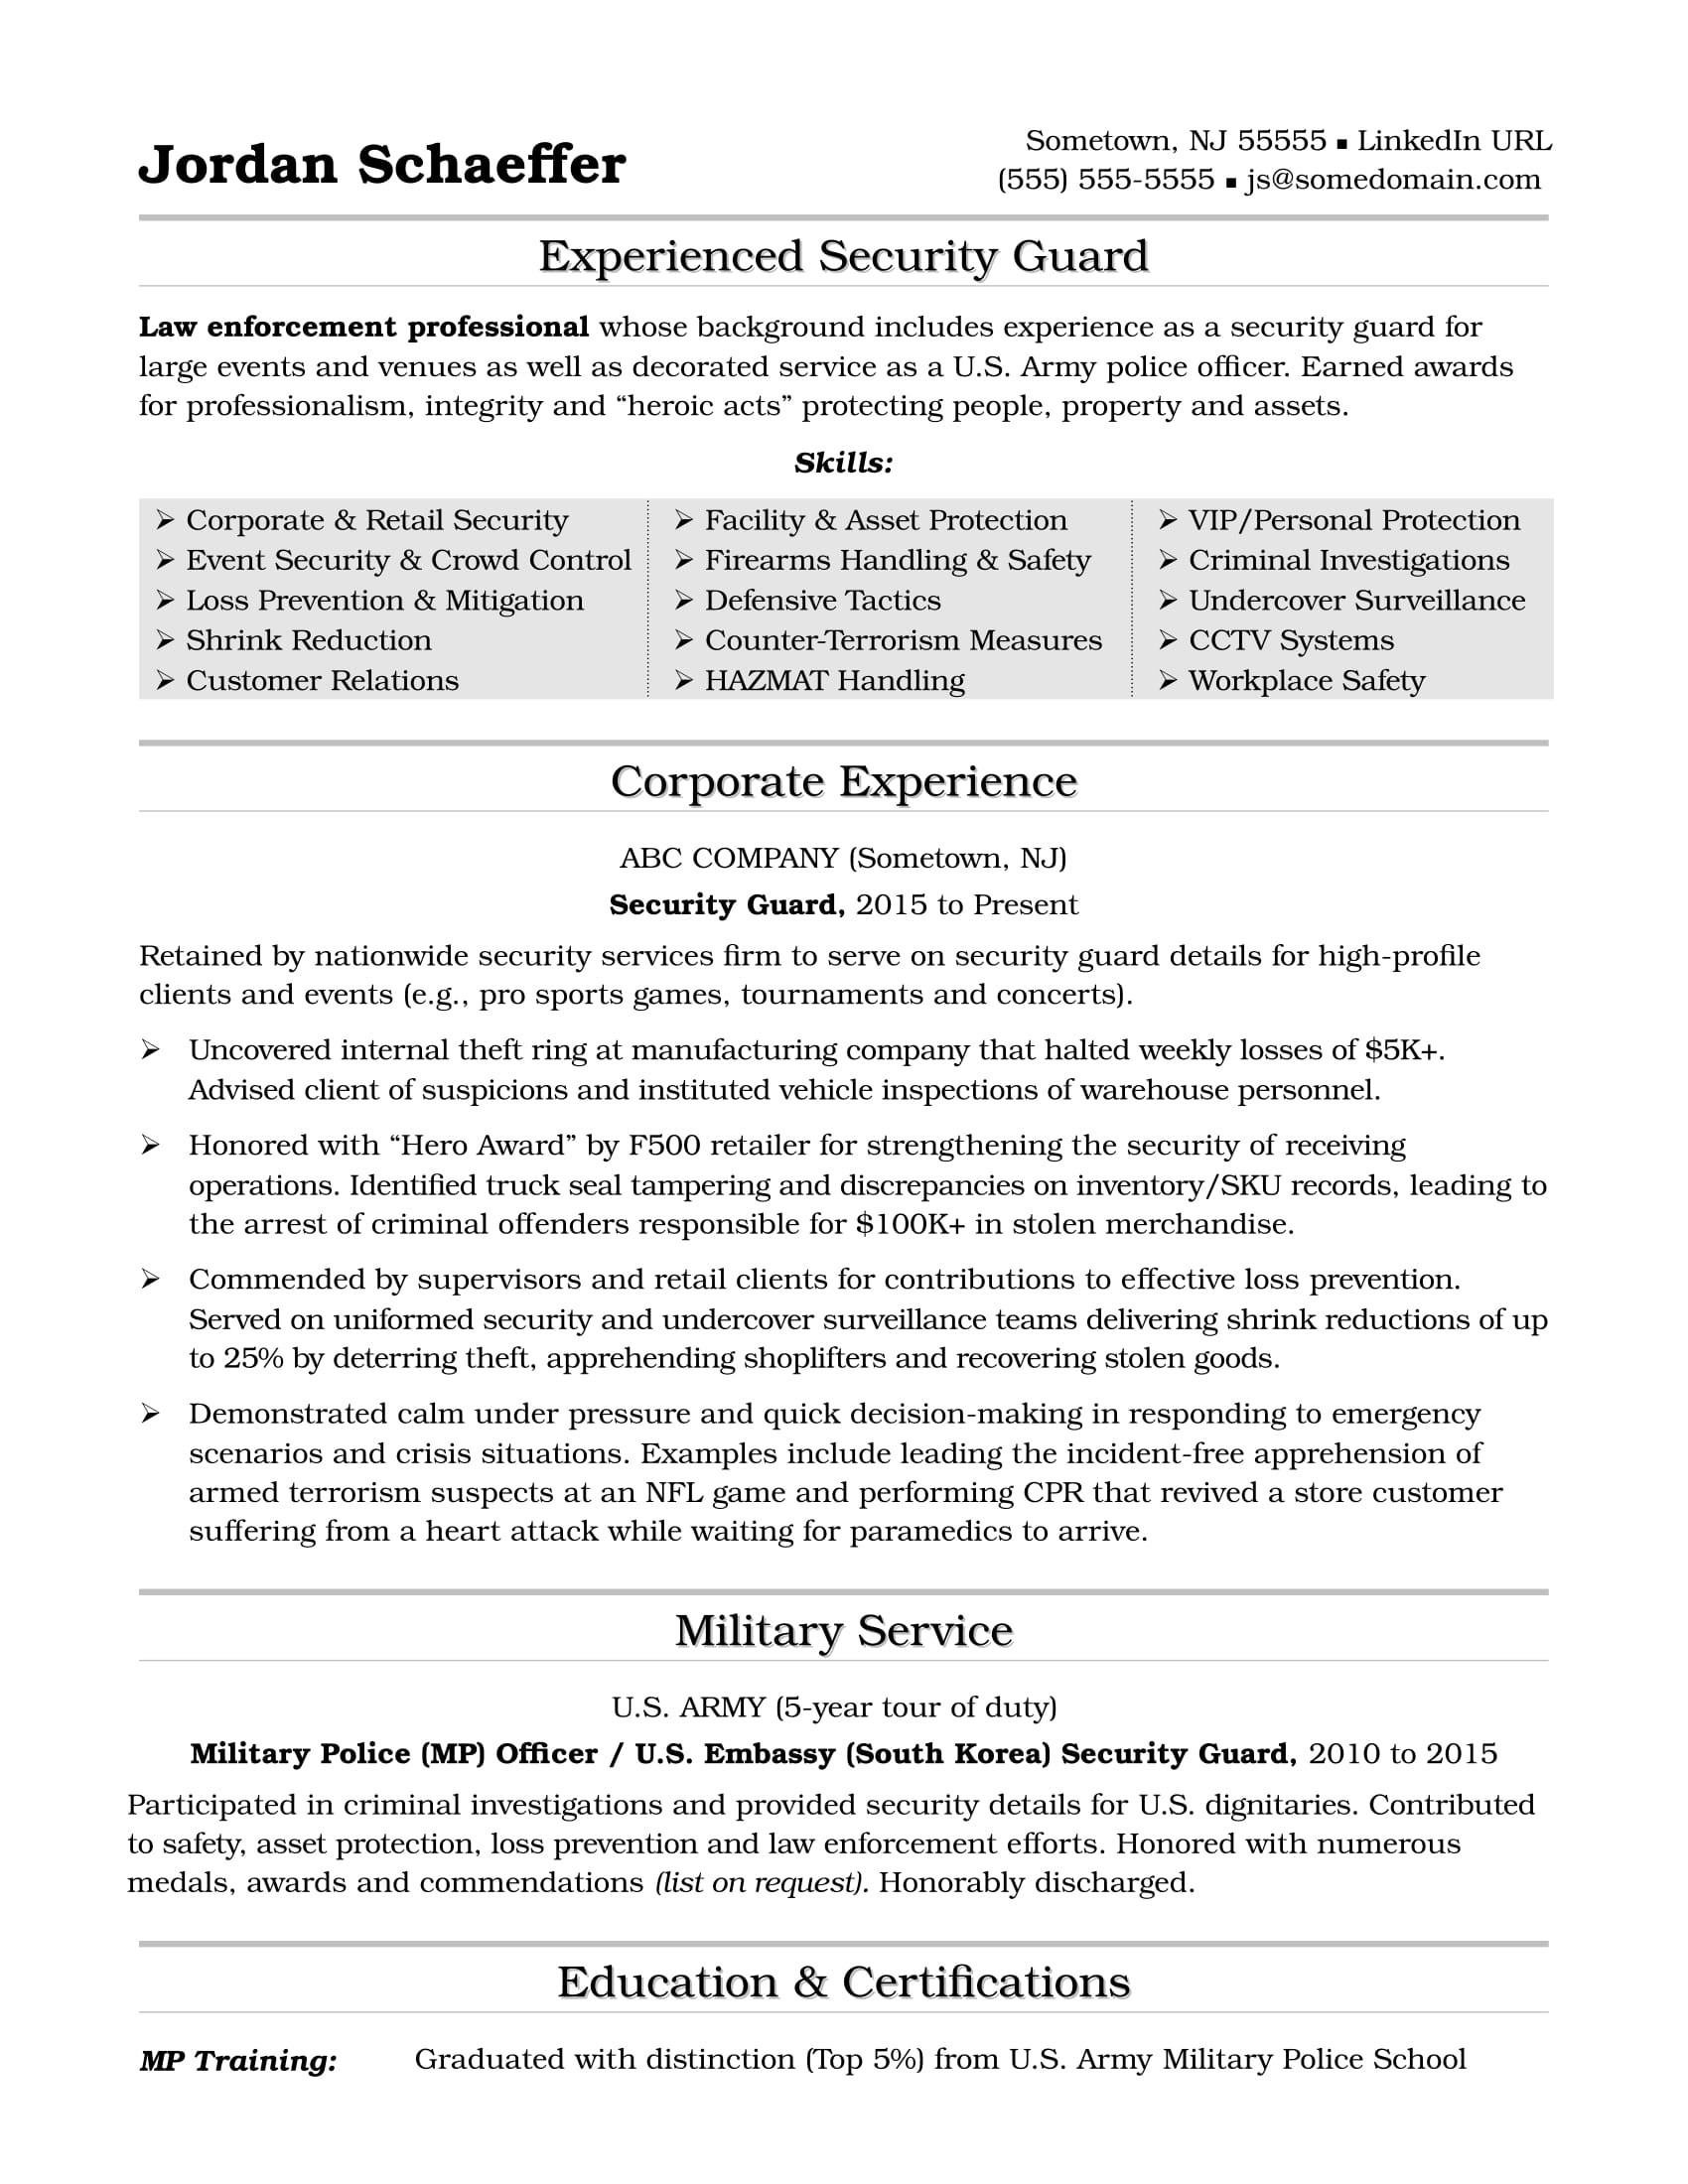 Free Sample Resume for Security Supervisor Security Guard Resume Sample Monster.com